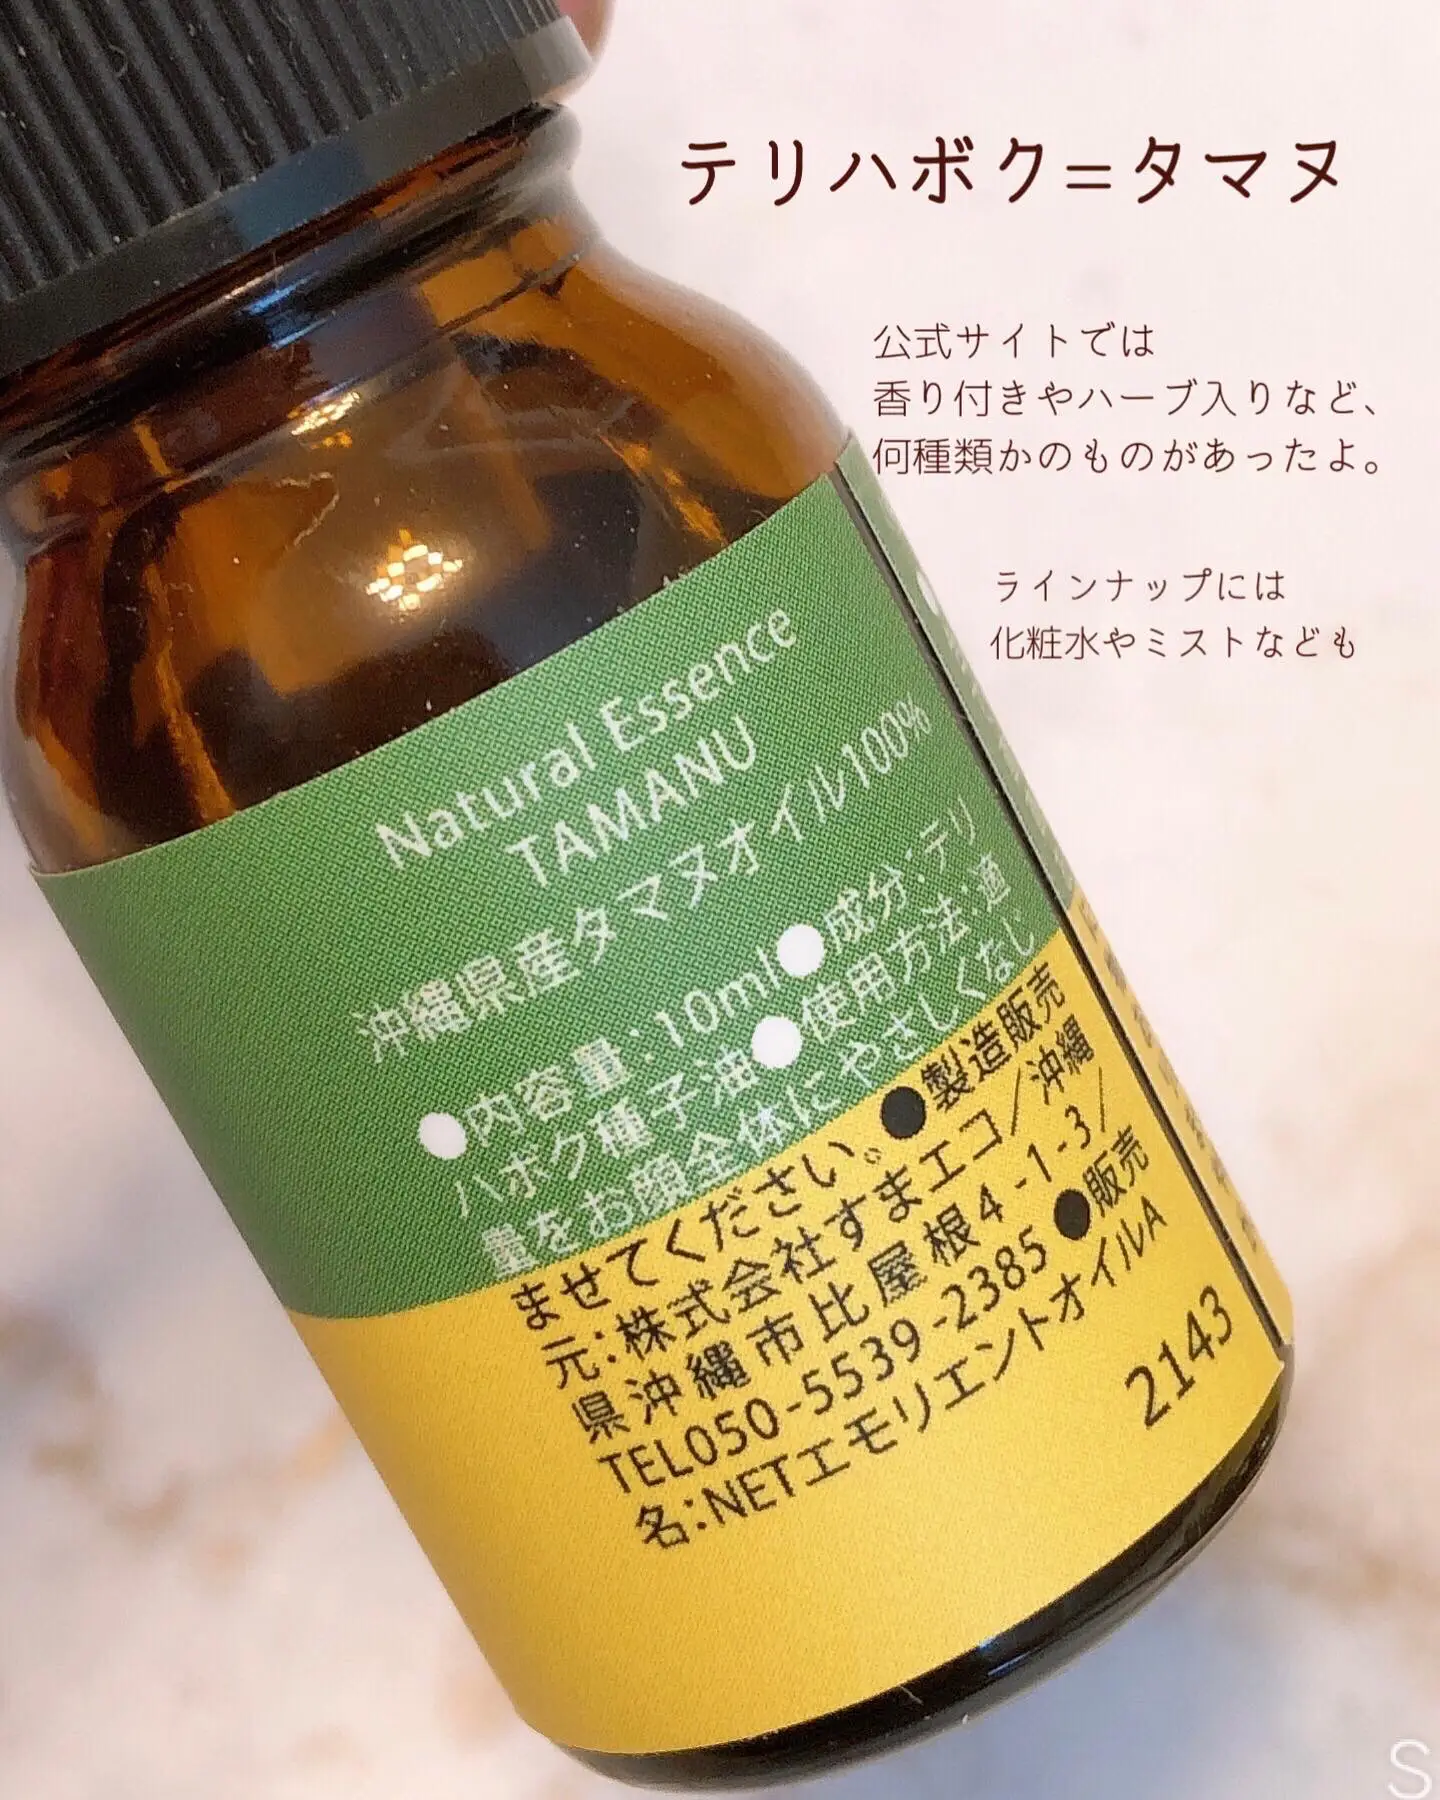 Tamanu Oil タマヌオイル エッセンスオイル - スキンケア/基礎化粧品